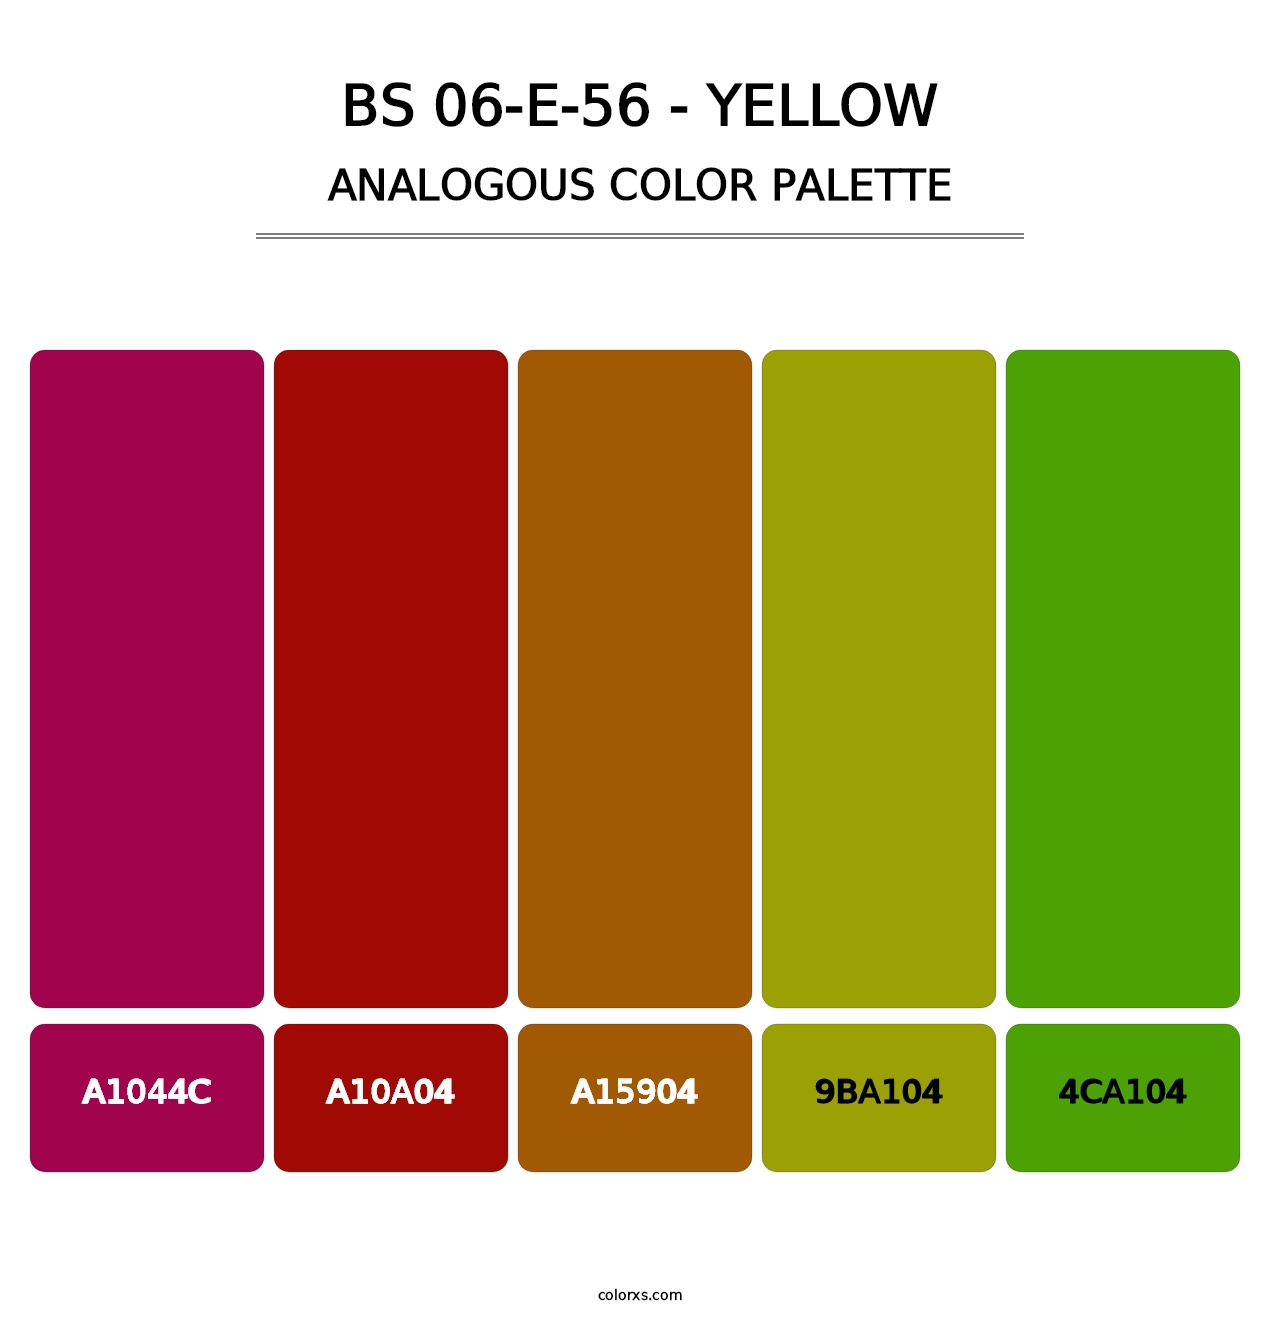 BS 06-E-56 - Yellow - Analogous Color Palette